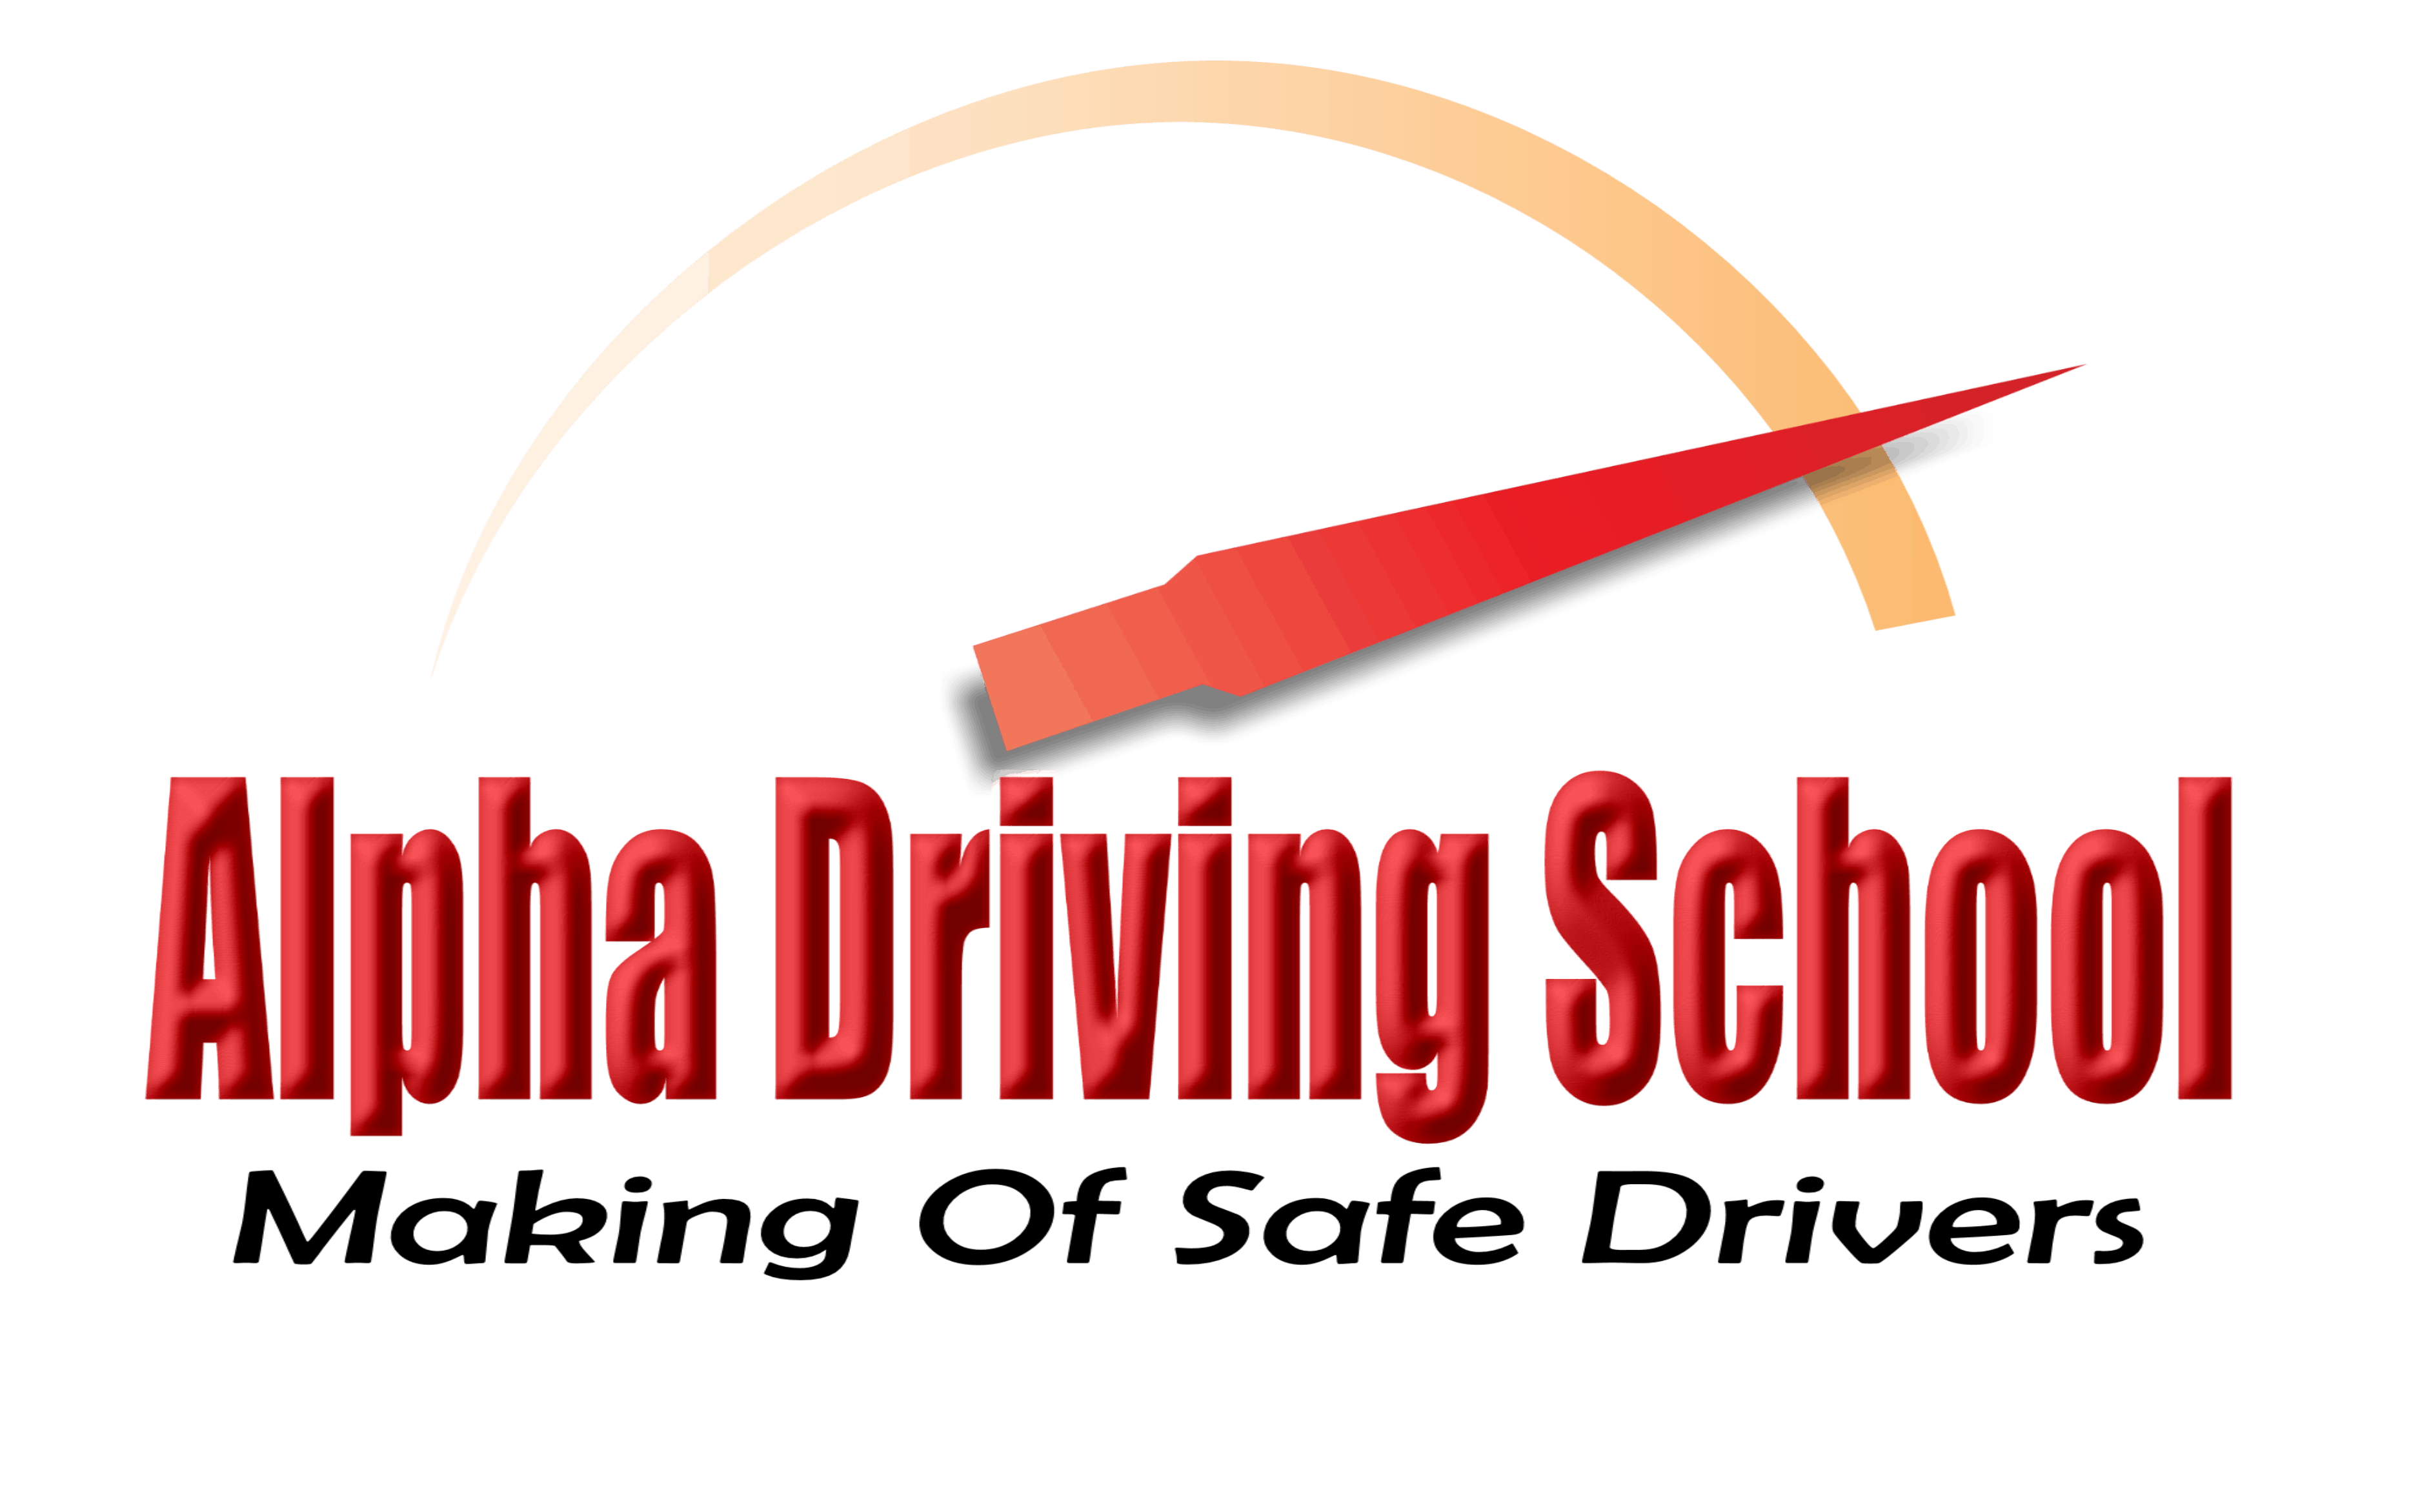 Driving School Alpha - Apple Valley, CA, US, driving school